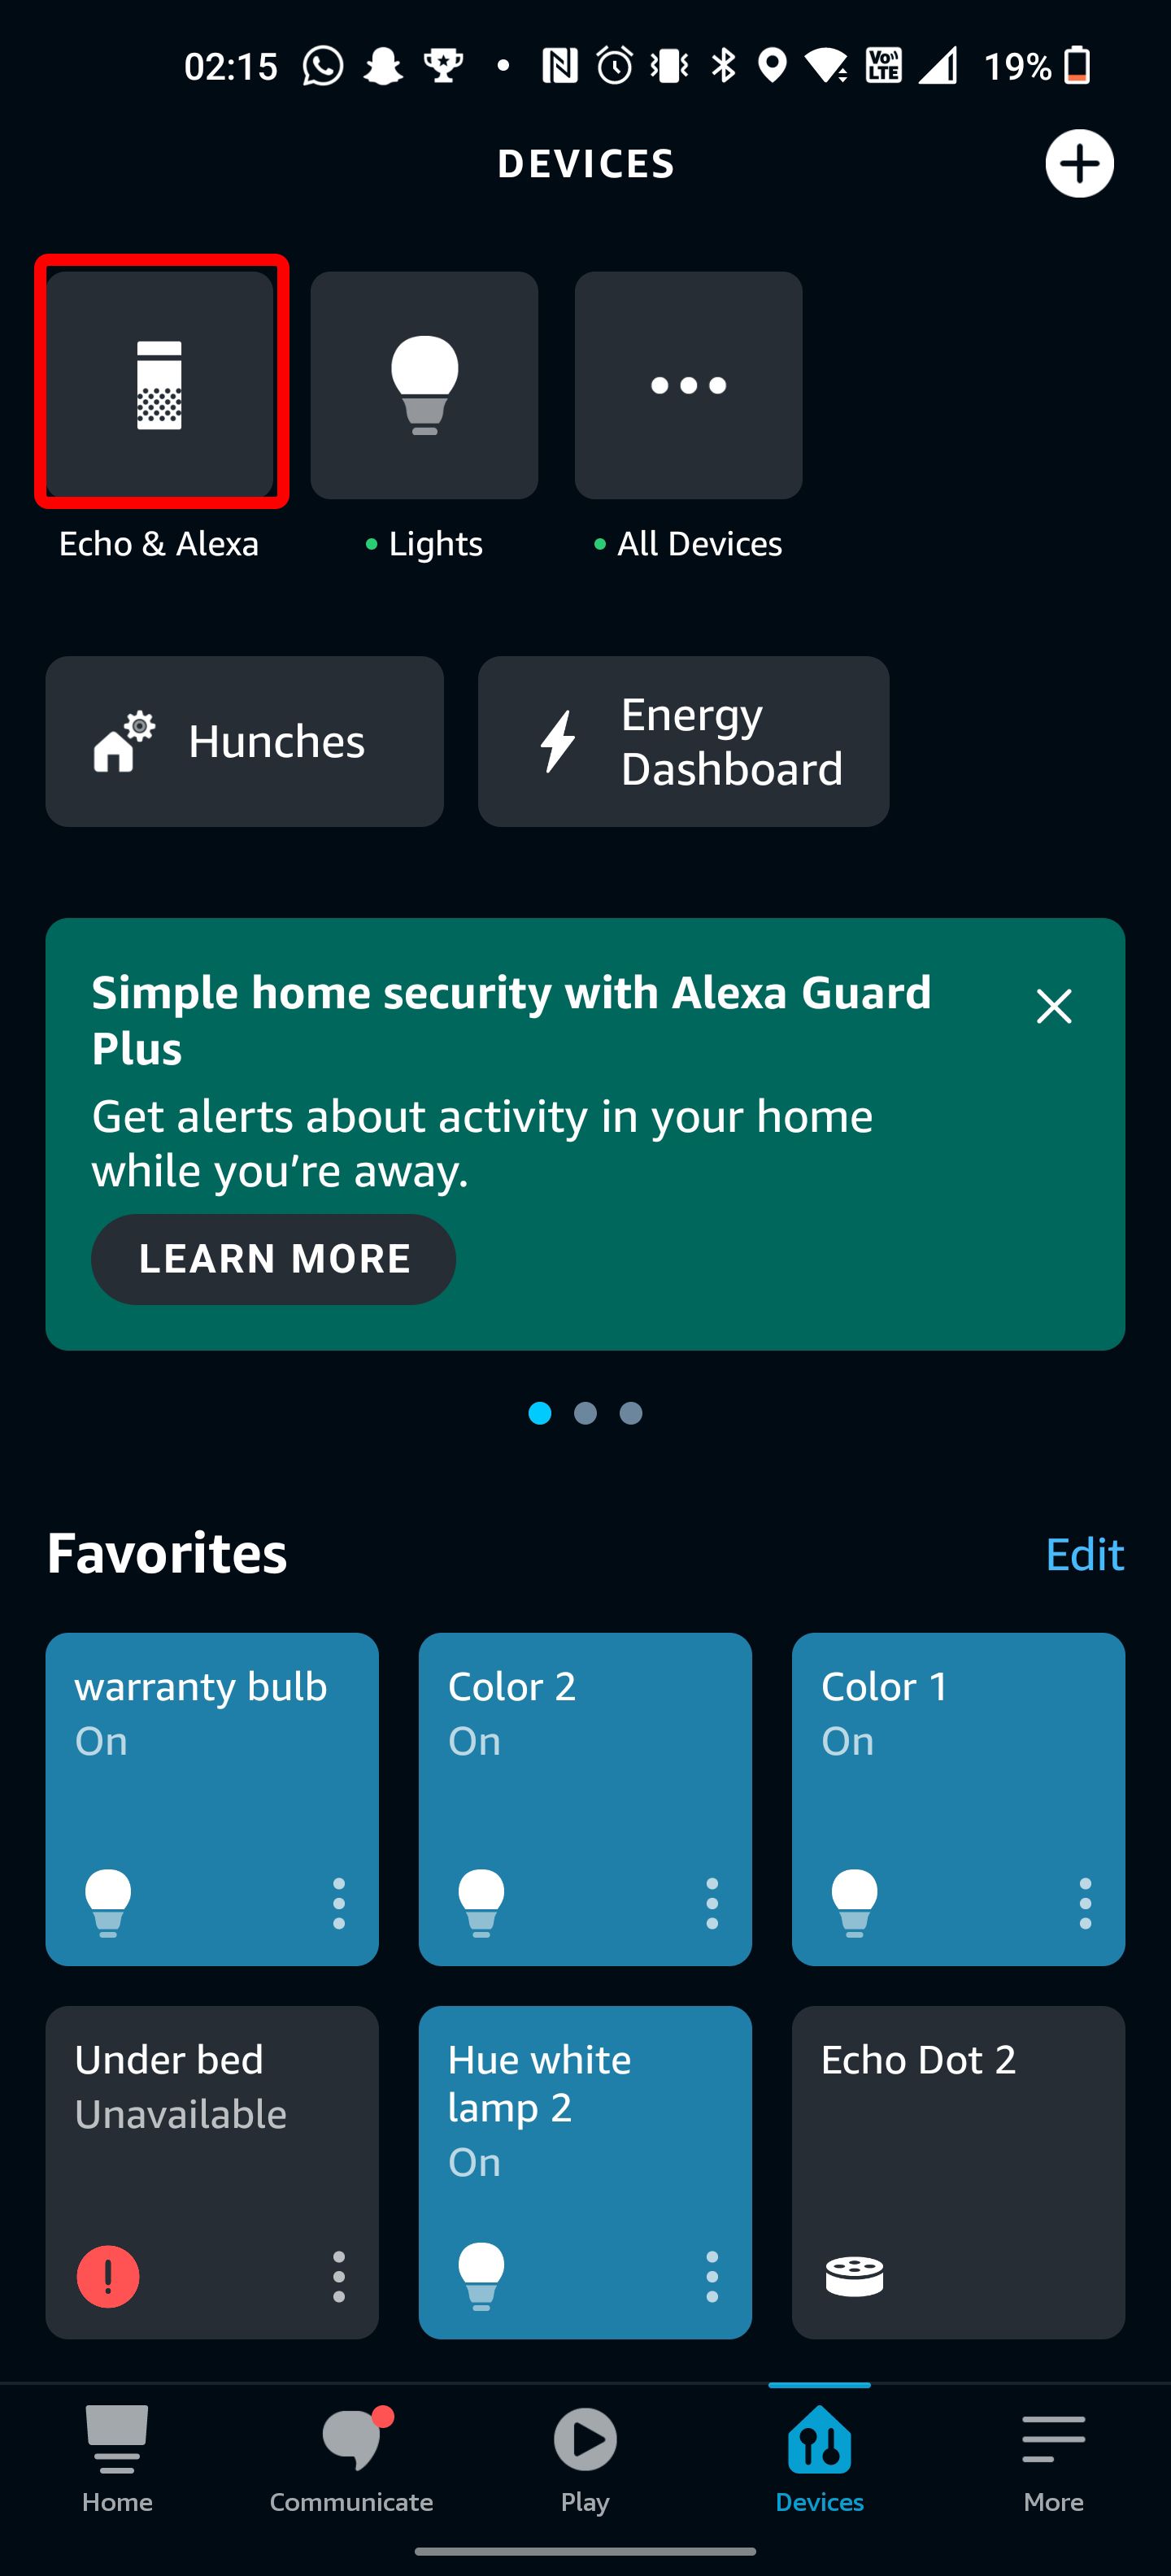 The Alexa app devices menu.